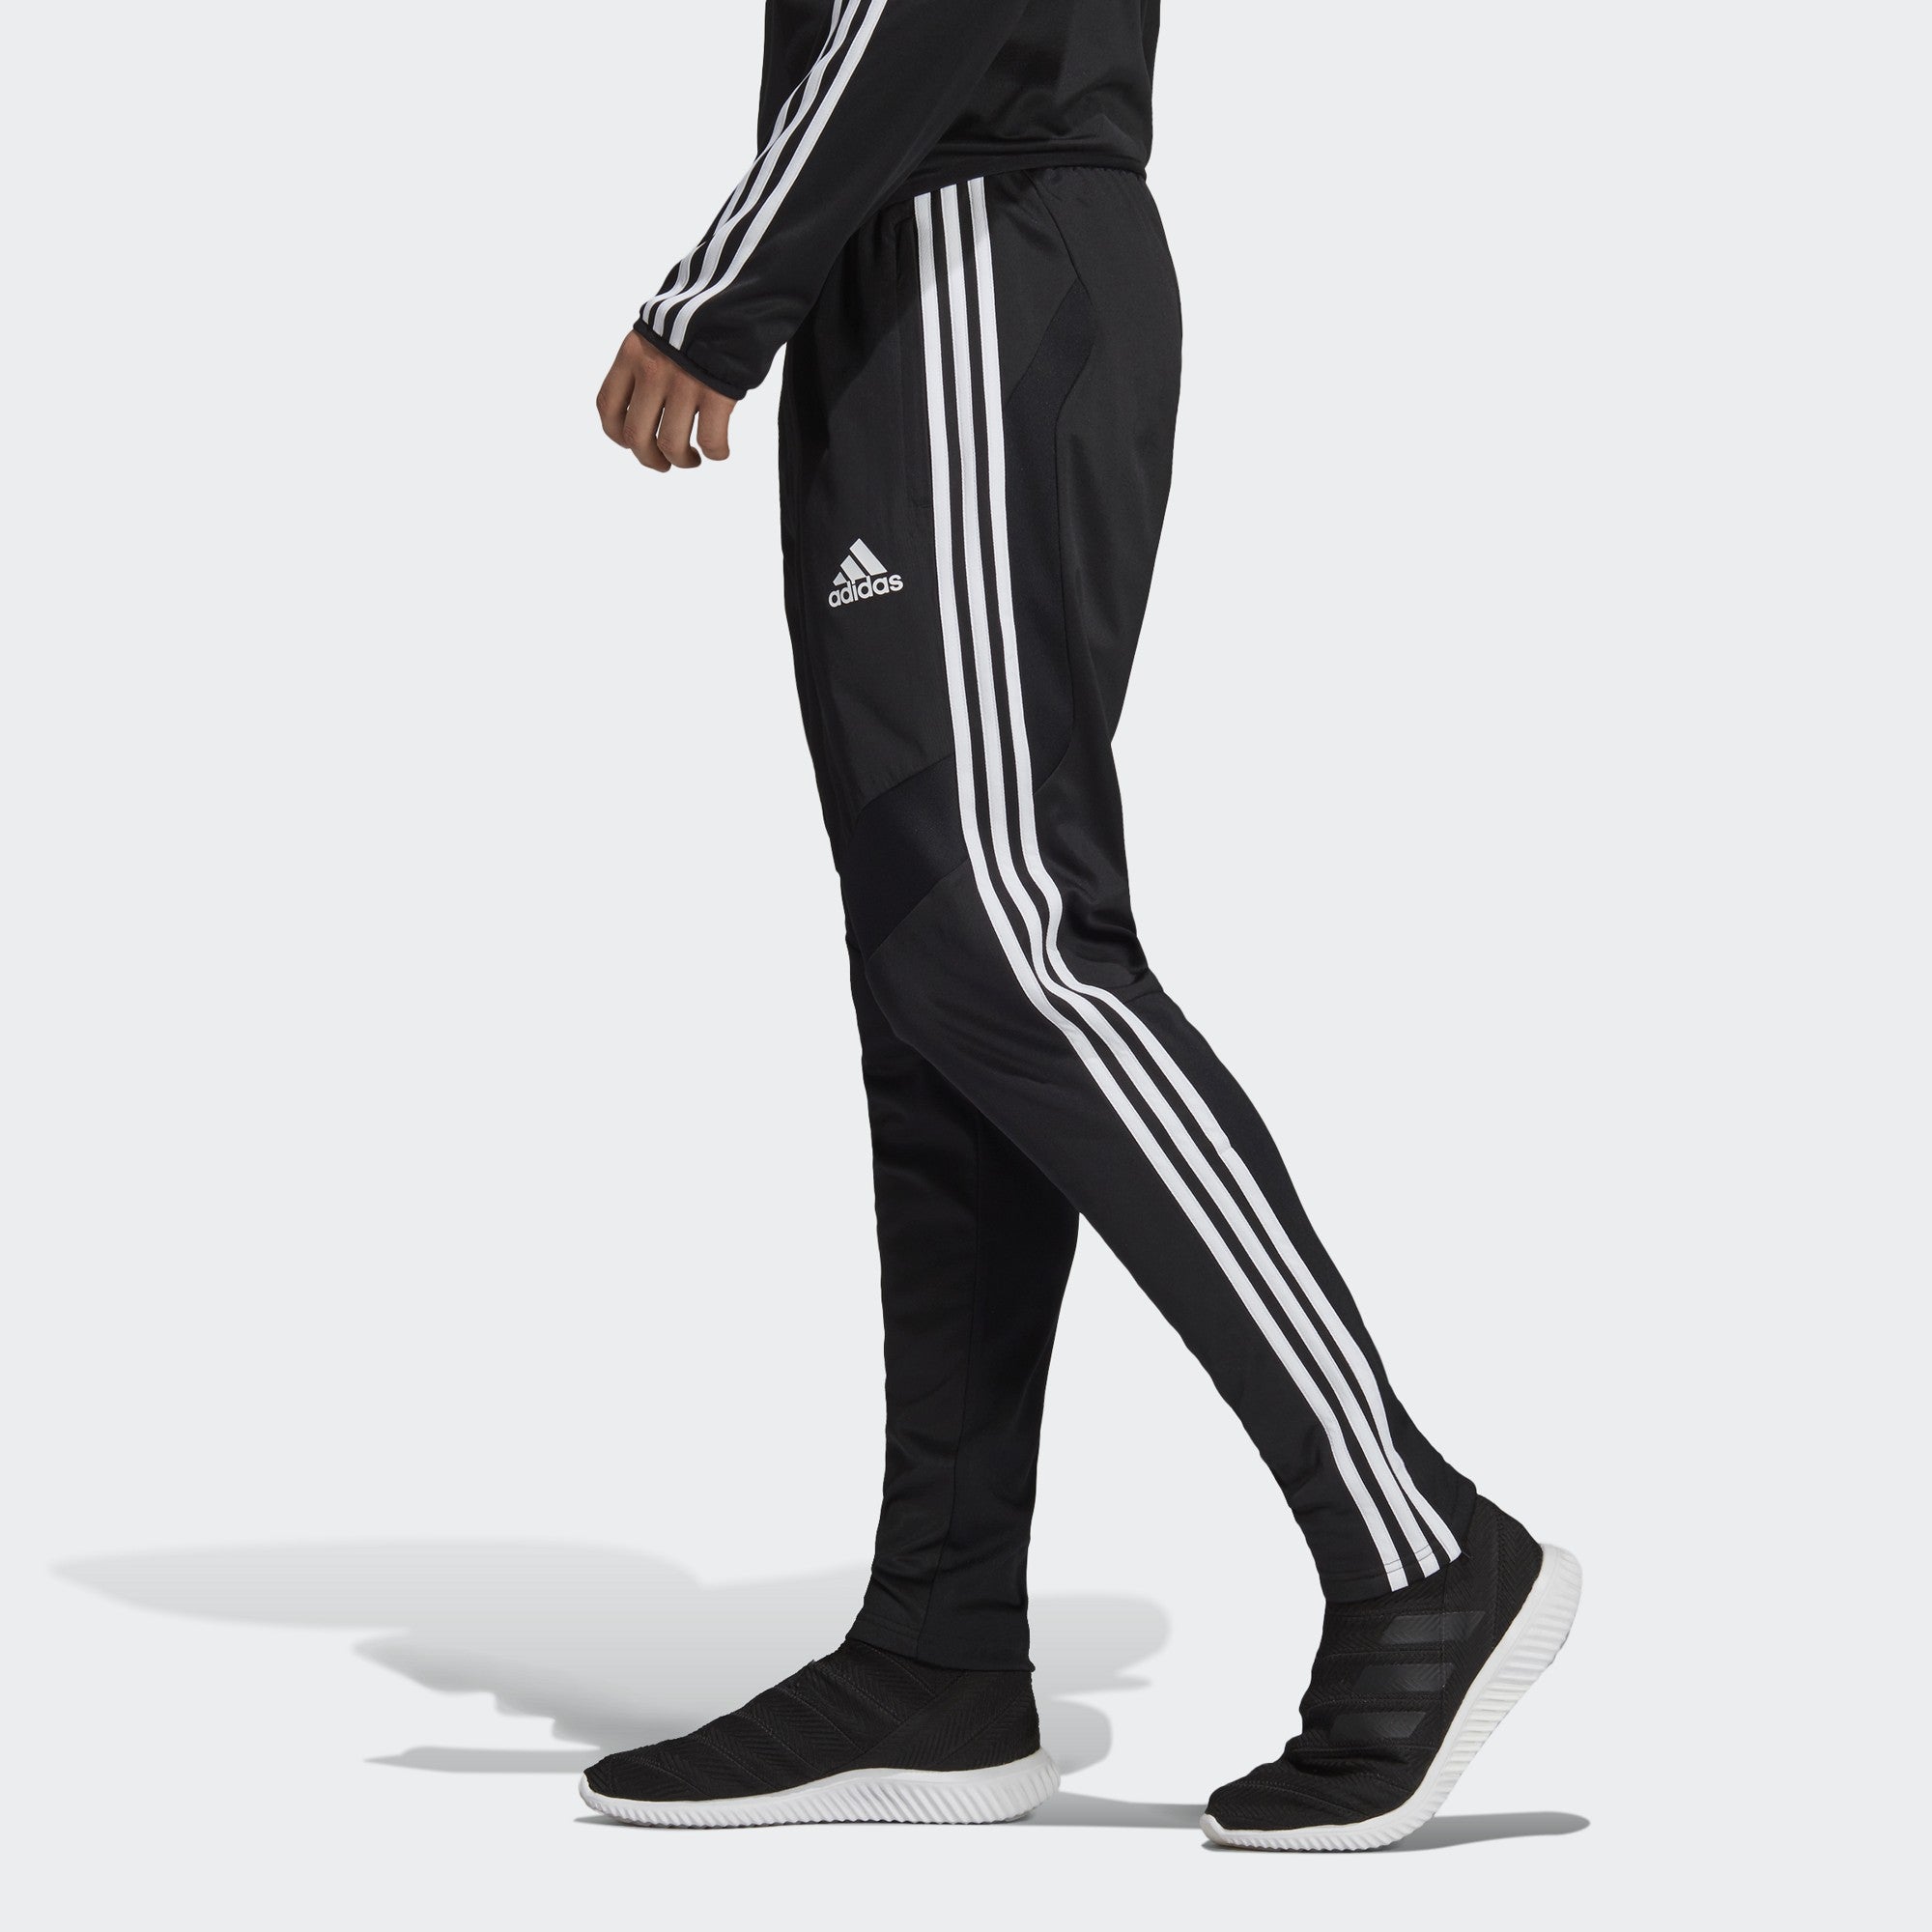 Adidas Sports Lower Pants